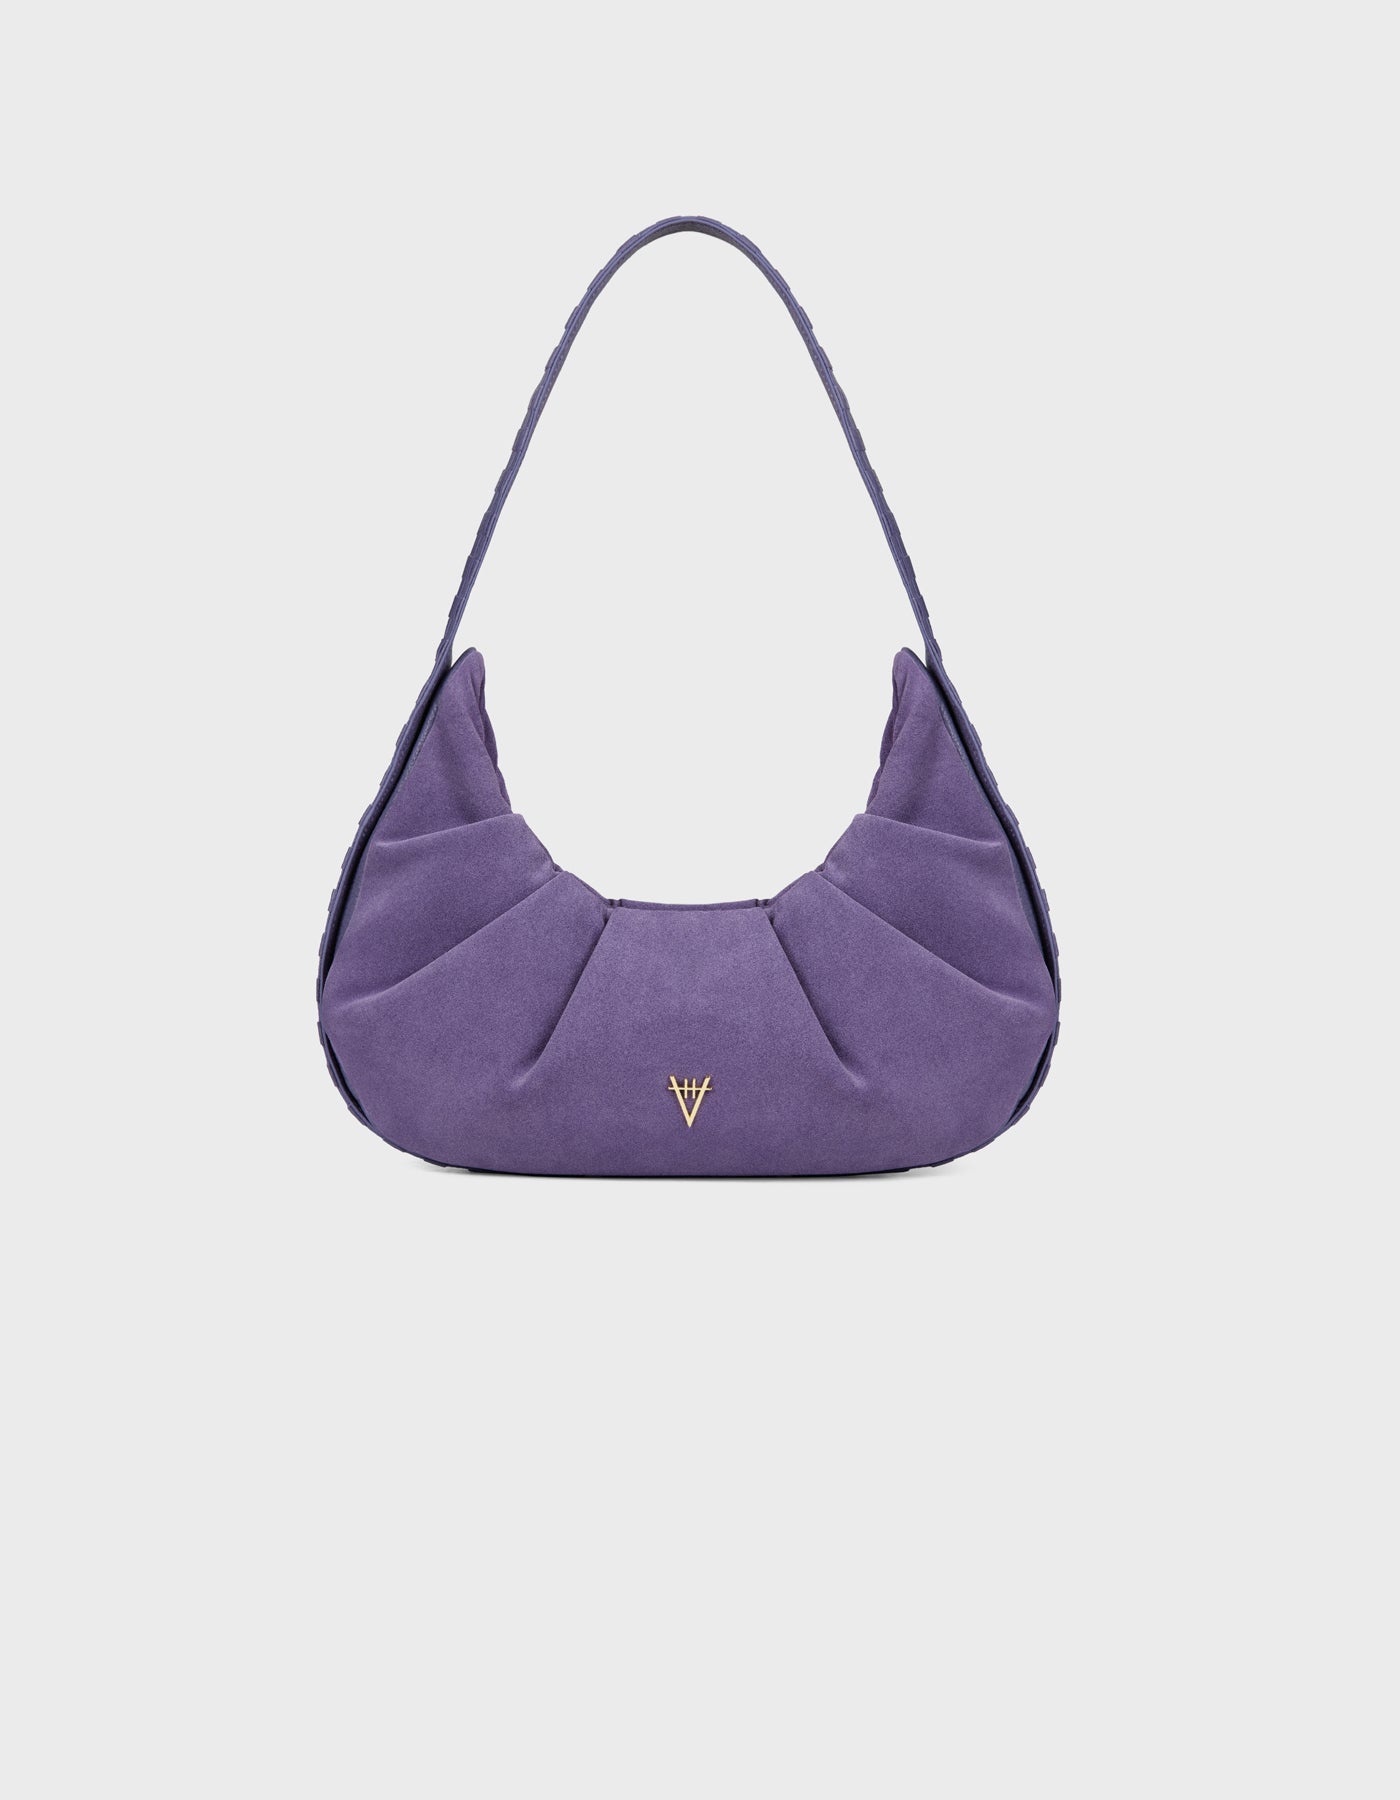 HiVa Atelier - Croissant Bag Lavender Silk & Suede